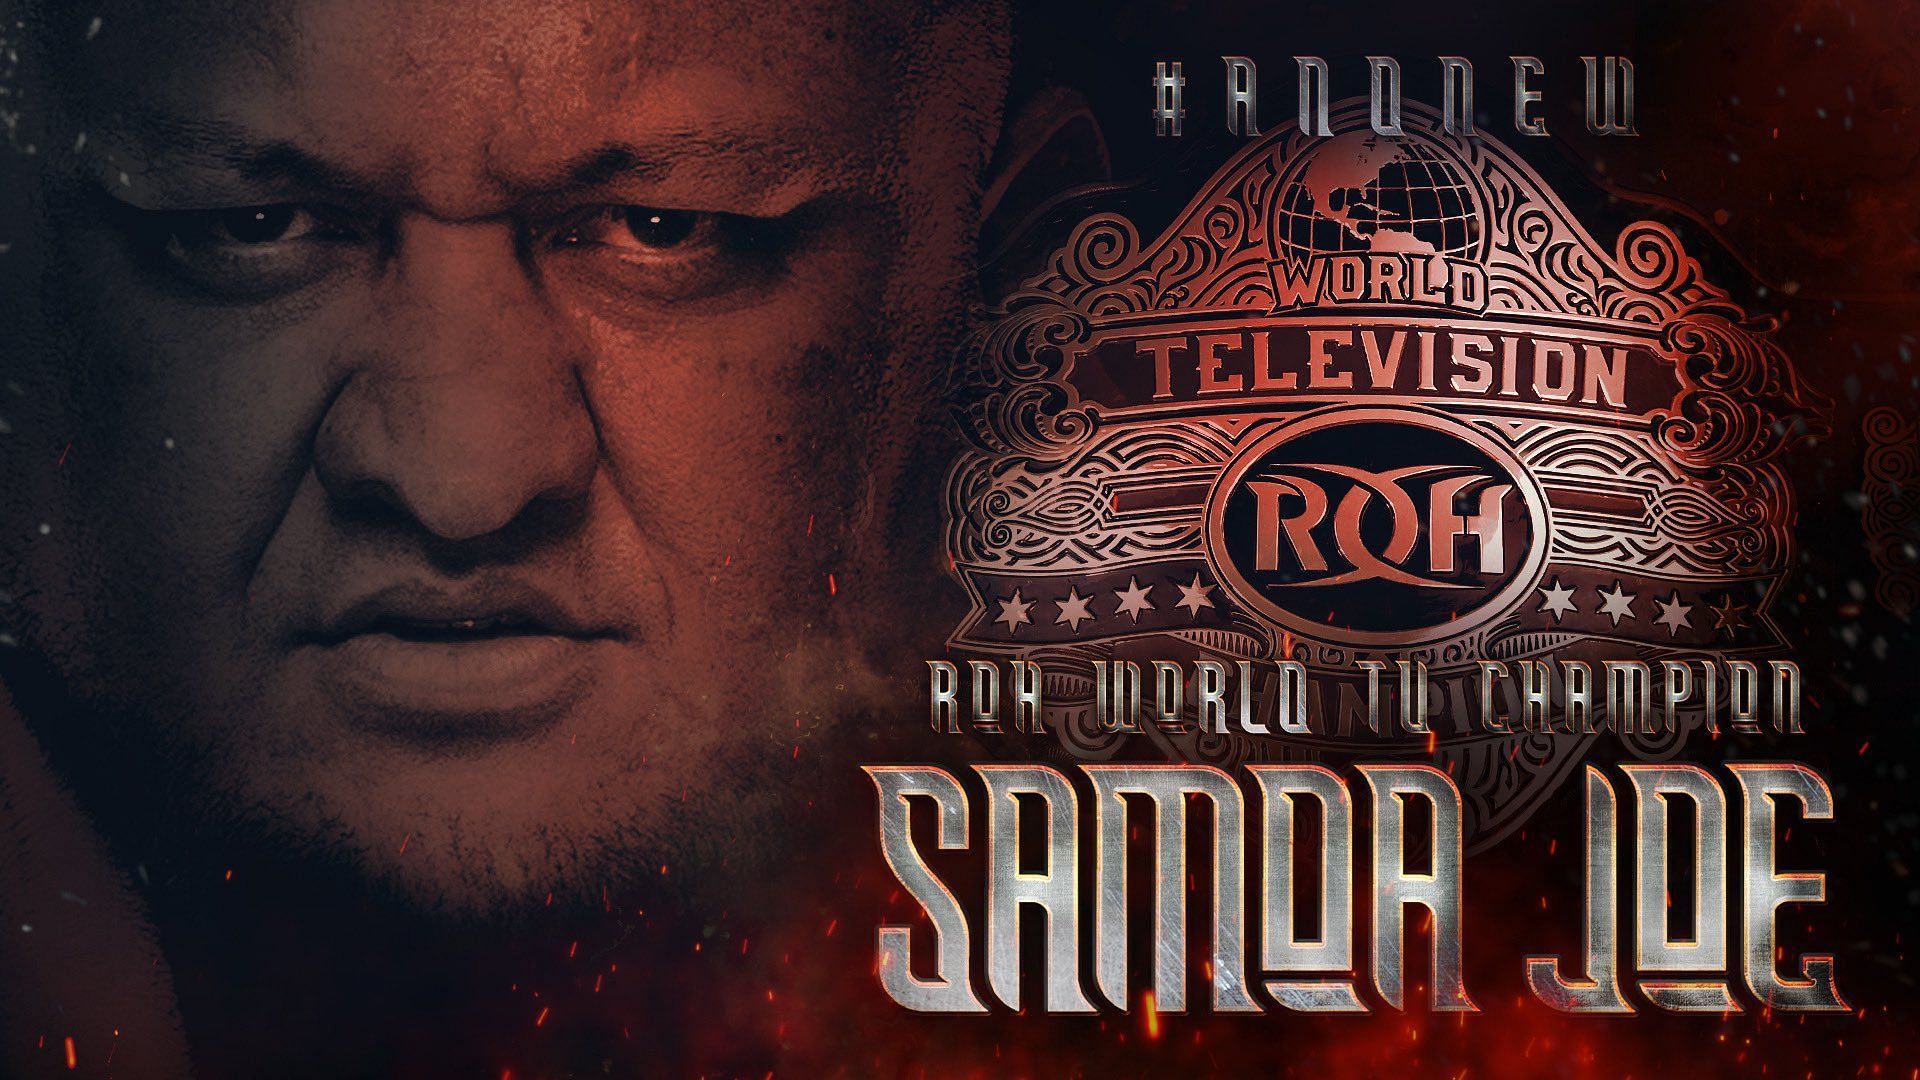 Samoa Joe defeated Minoru Suzuki to win the ROH TV title.